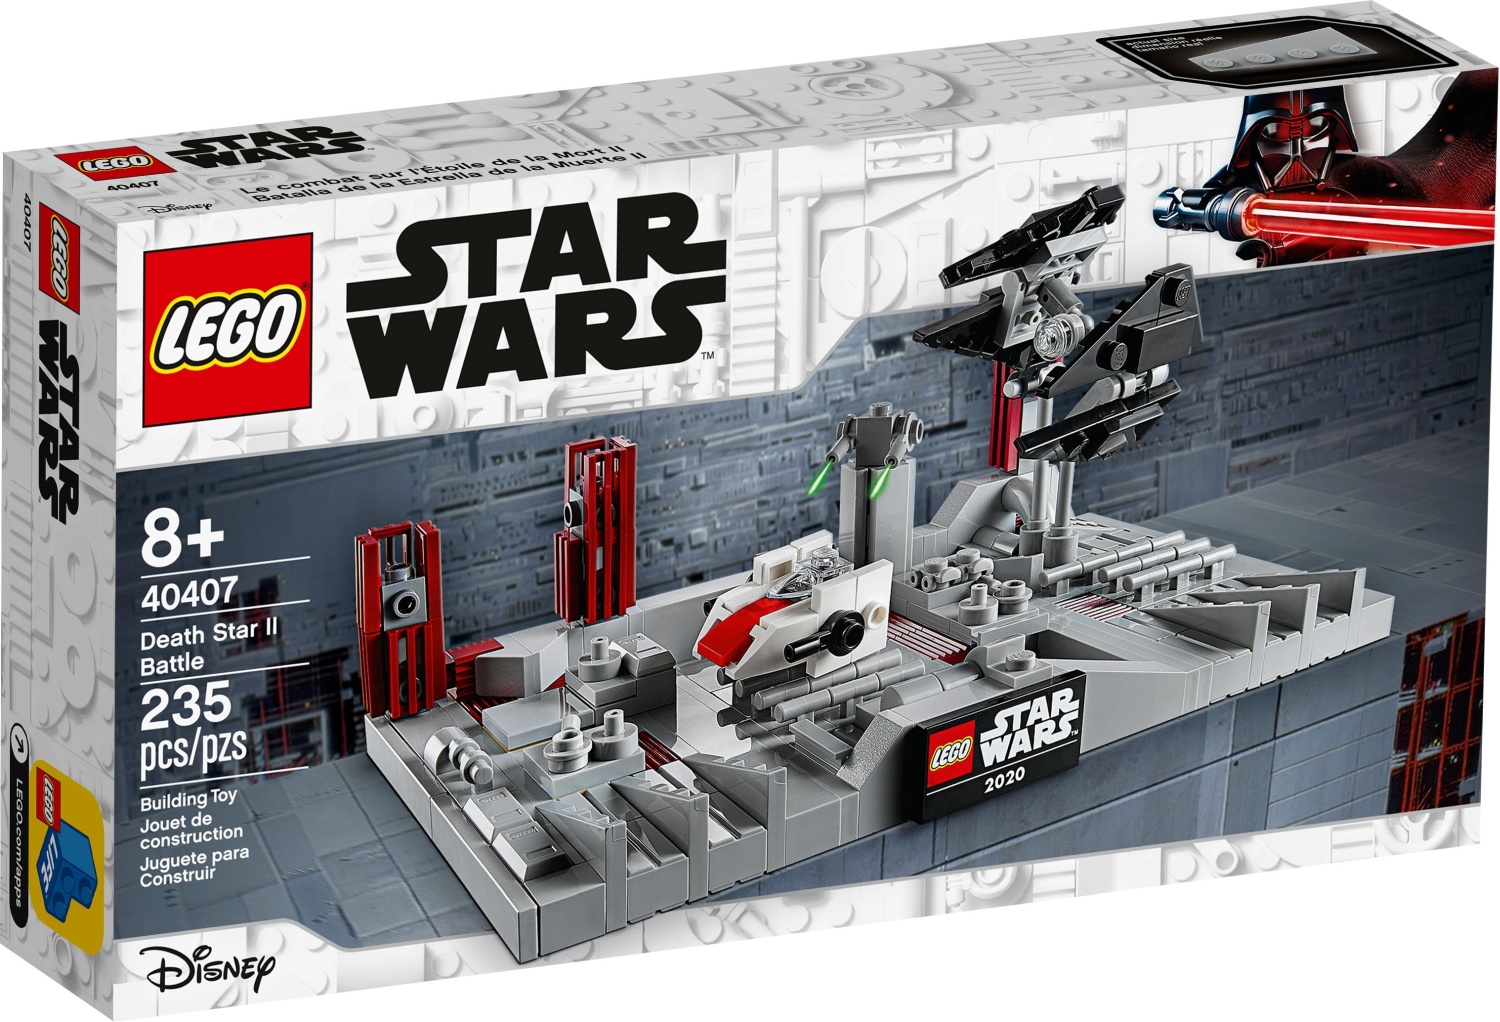 LEGO Star Wars Death Star II Battle (40407) Available Again on LEGO Shop - The Brick Fan